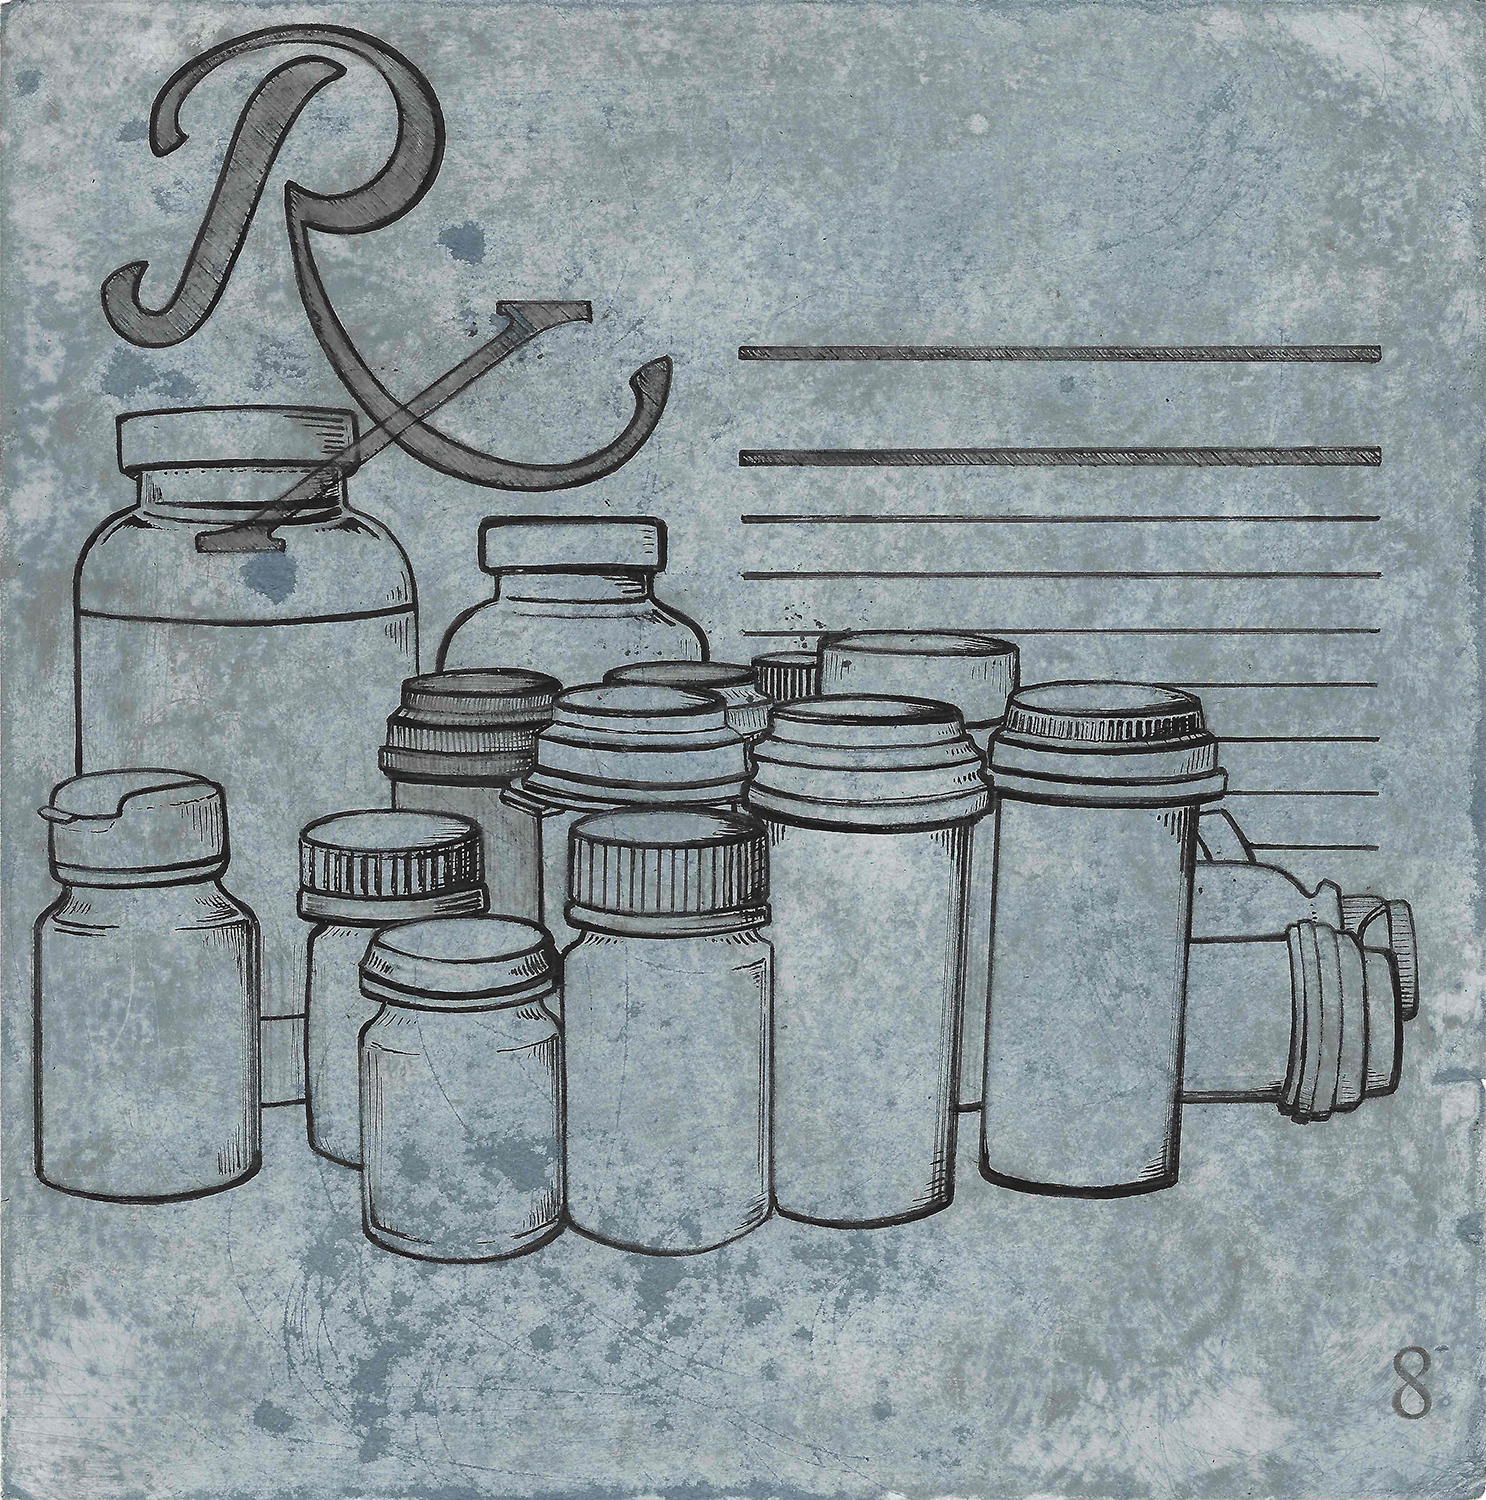 Print or illustrations with prescription symbol and medicine bottles